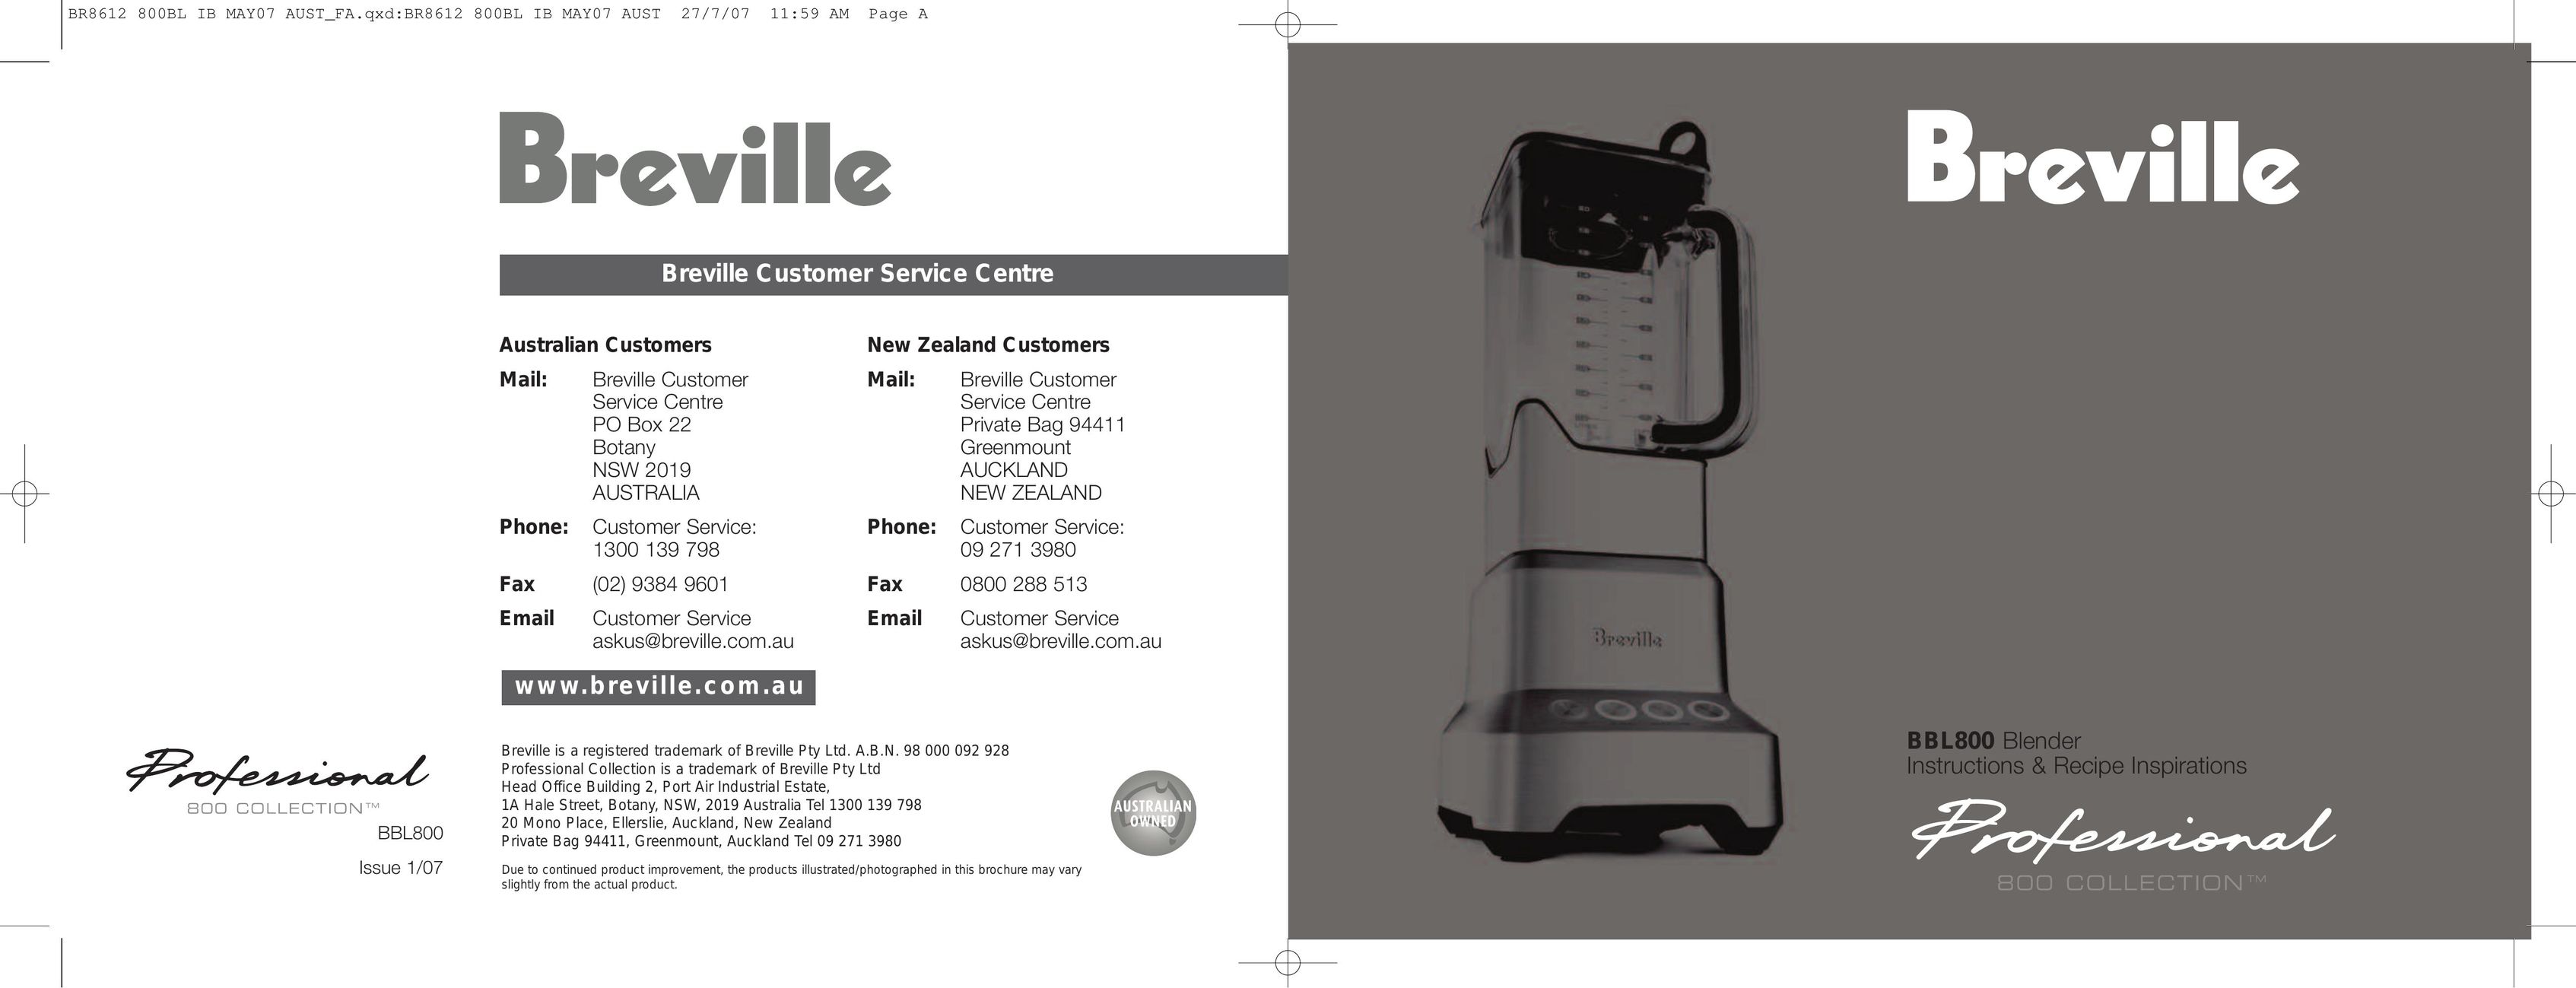 Breville BBL800 Blender User Manual